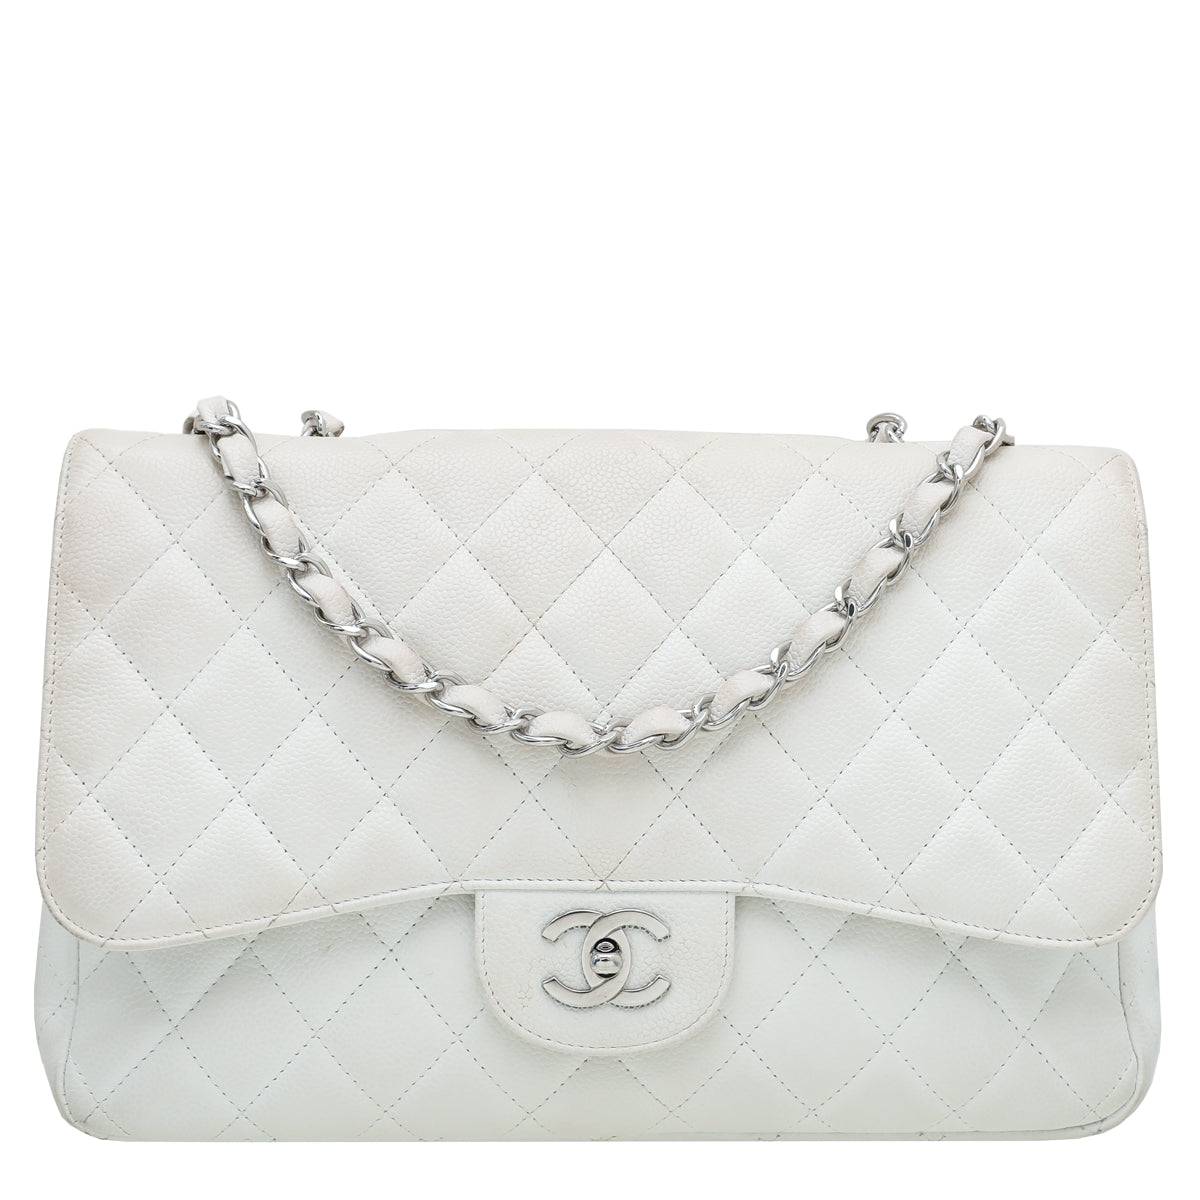 Chanel White CC Classic Single Flap Jumbo Bag